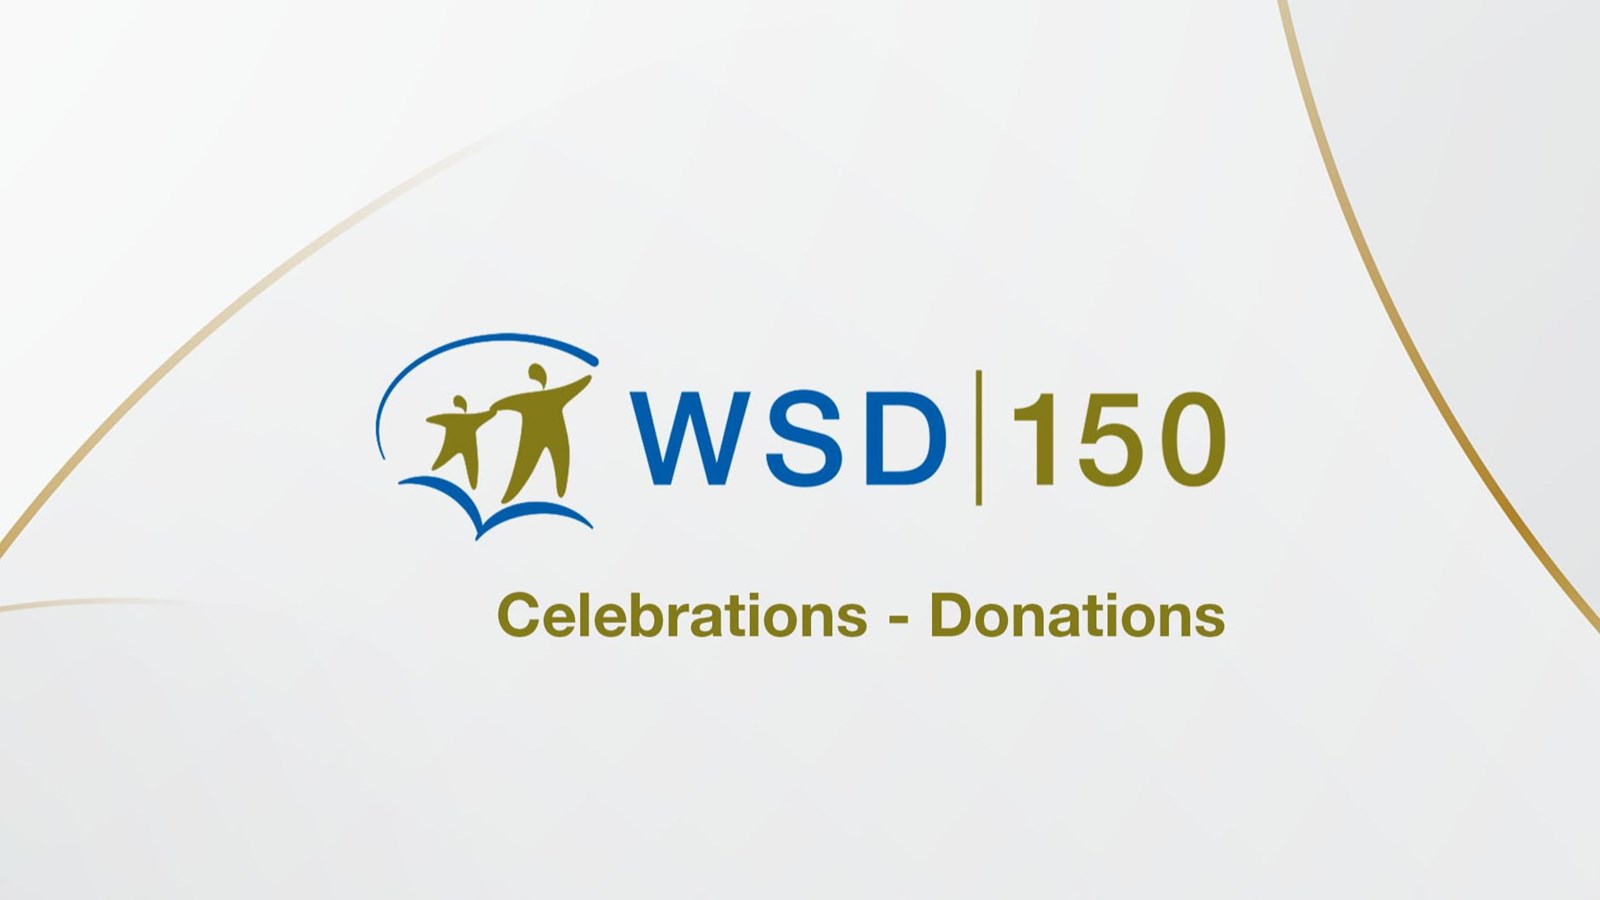 WSD 150 Celebrations - Donations